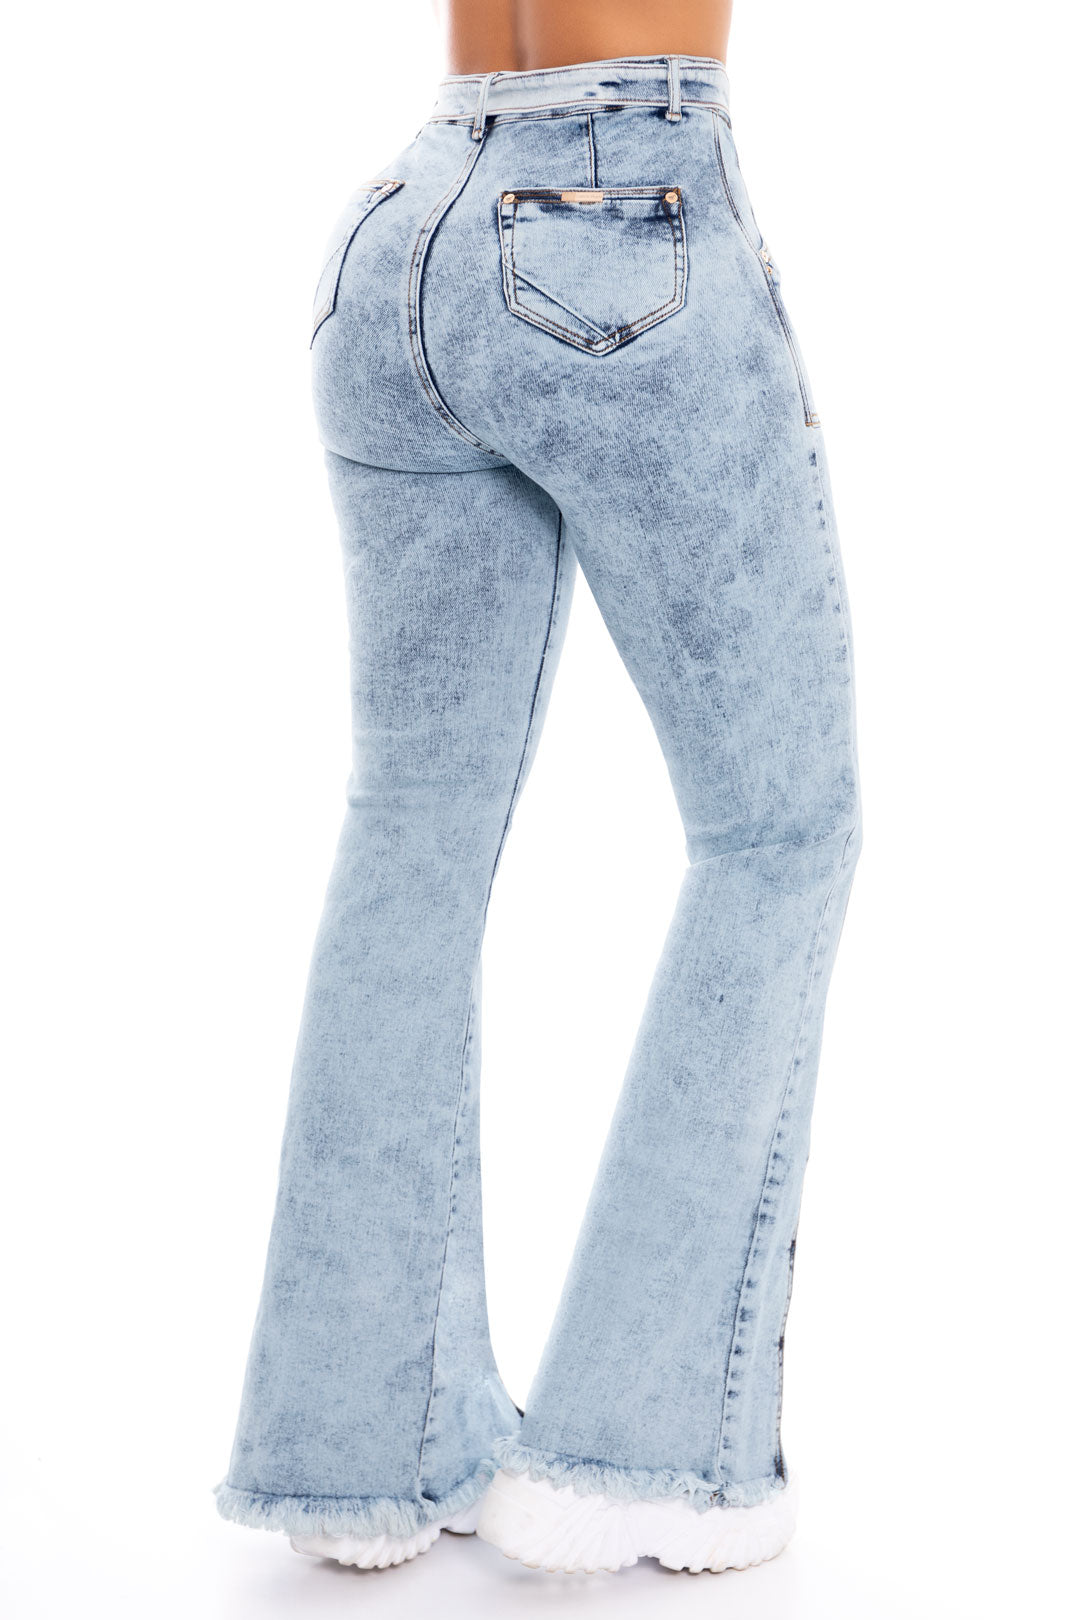 Jeans Bota Campana Azul Carlos Prada 6217 | Colombiana de jeans